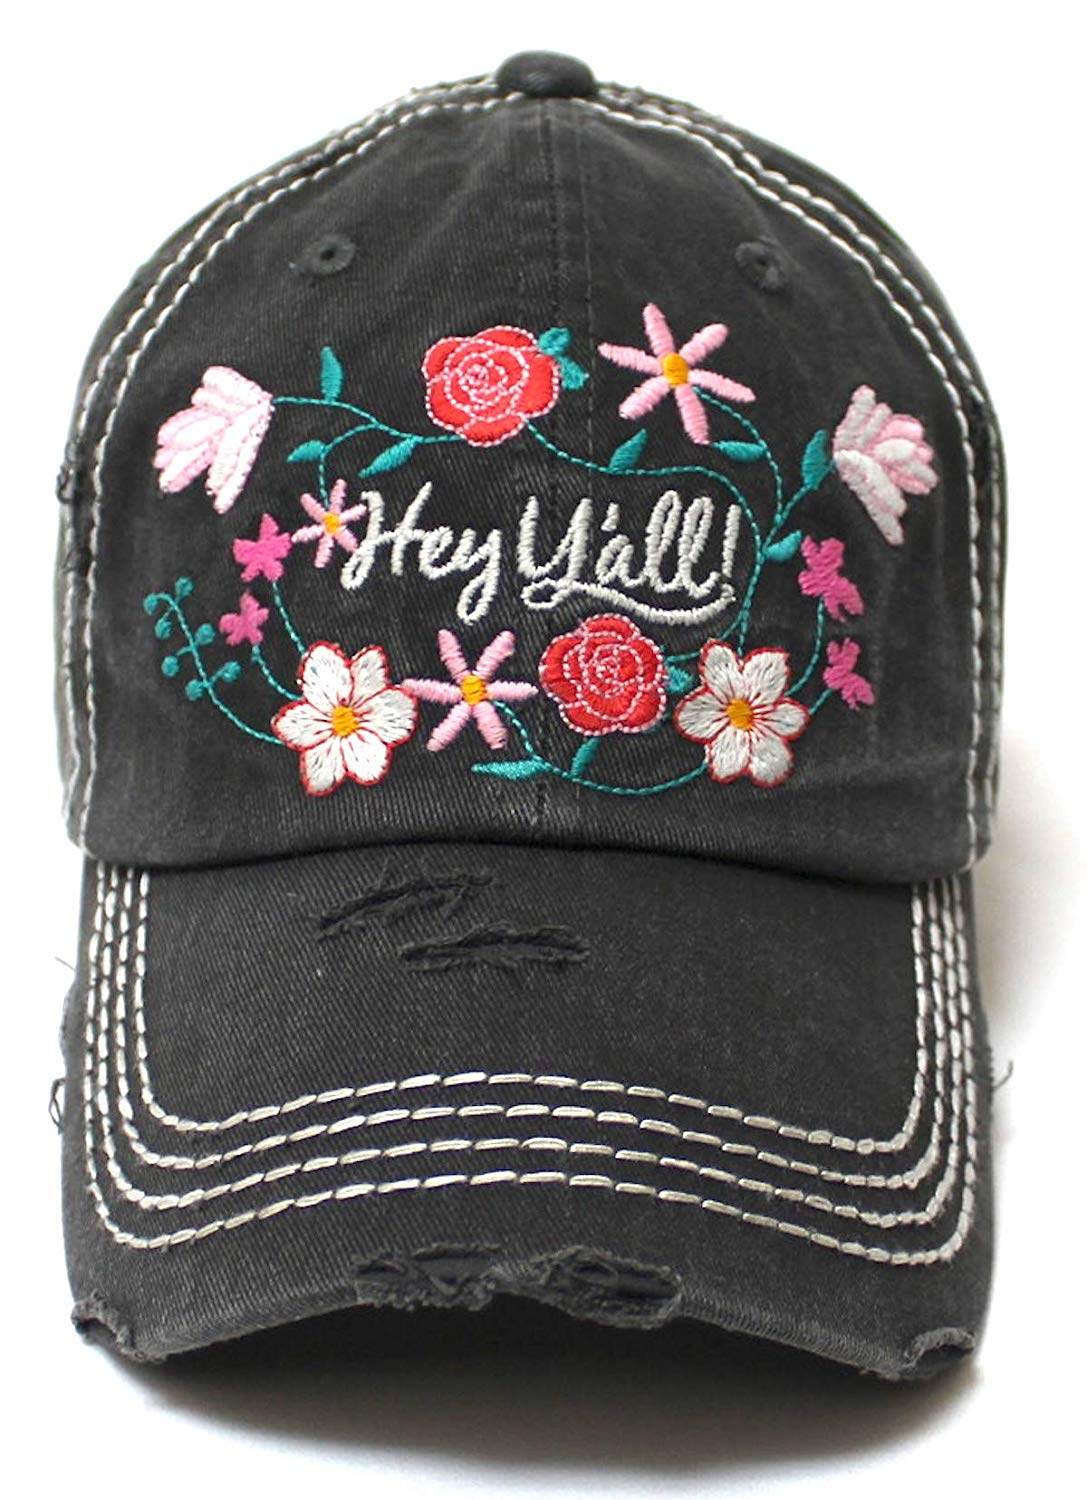 Women's Summer Ballcap Hey Y'all! Wildflower Embroidery Hat, Black - Caps 'N Vintage 